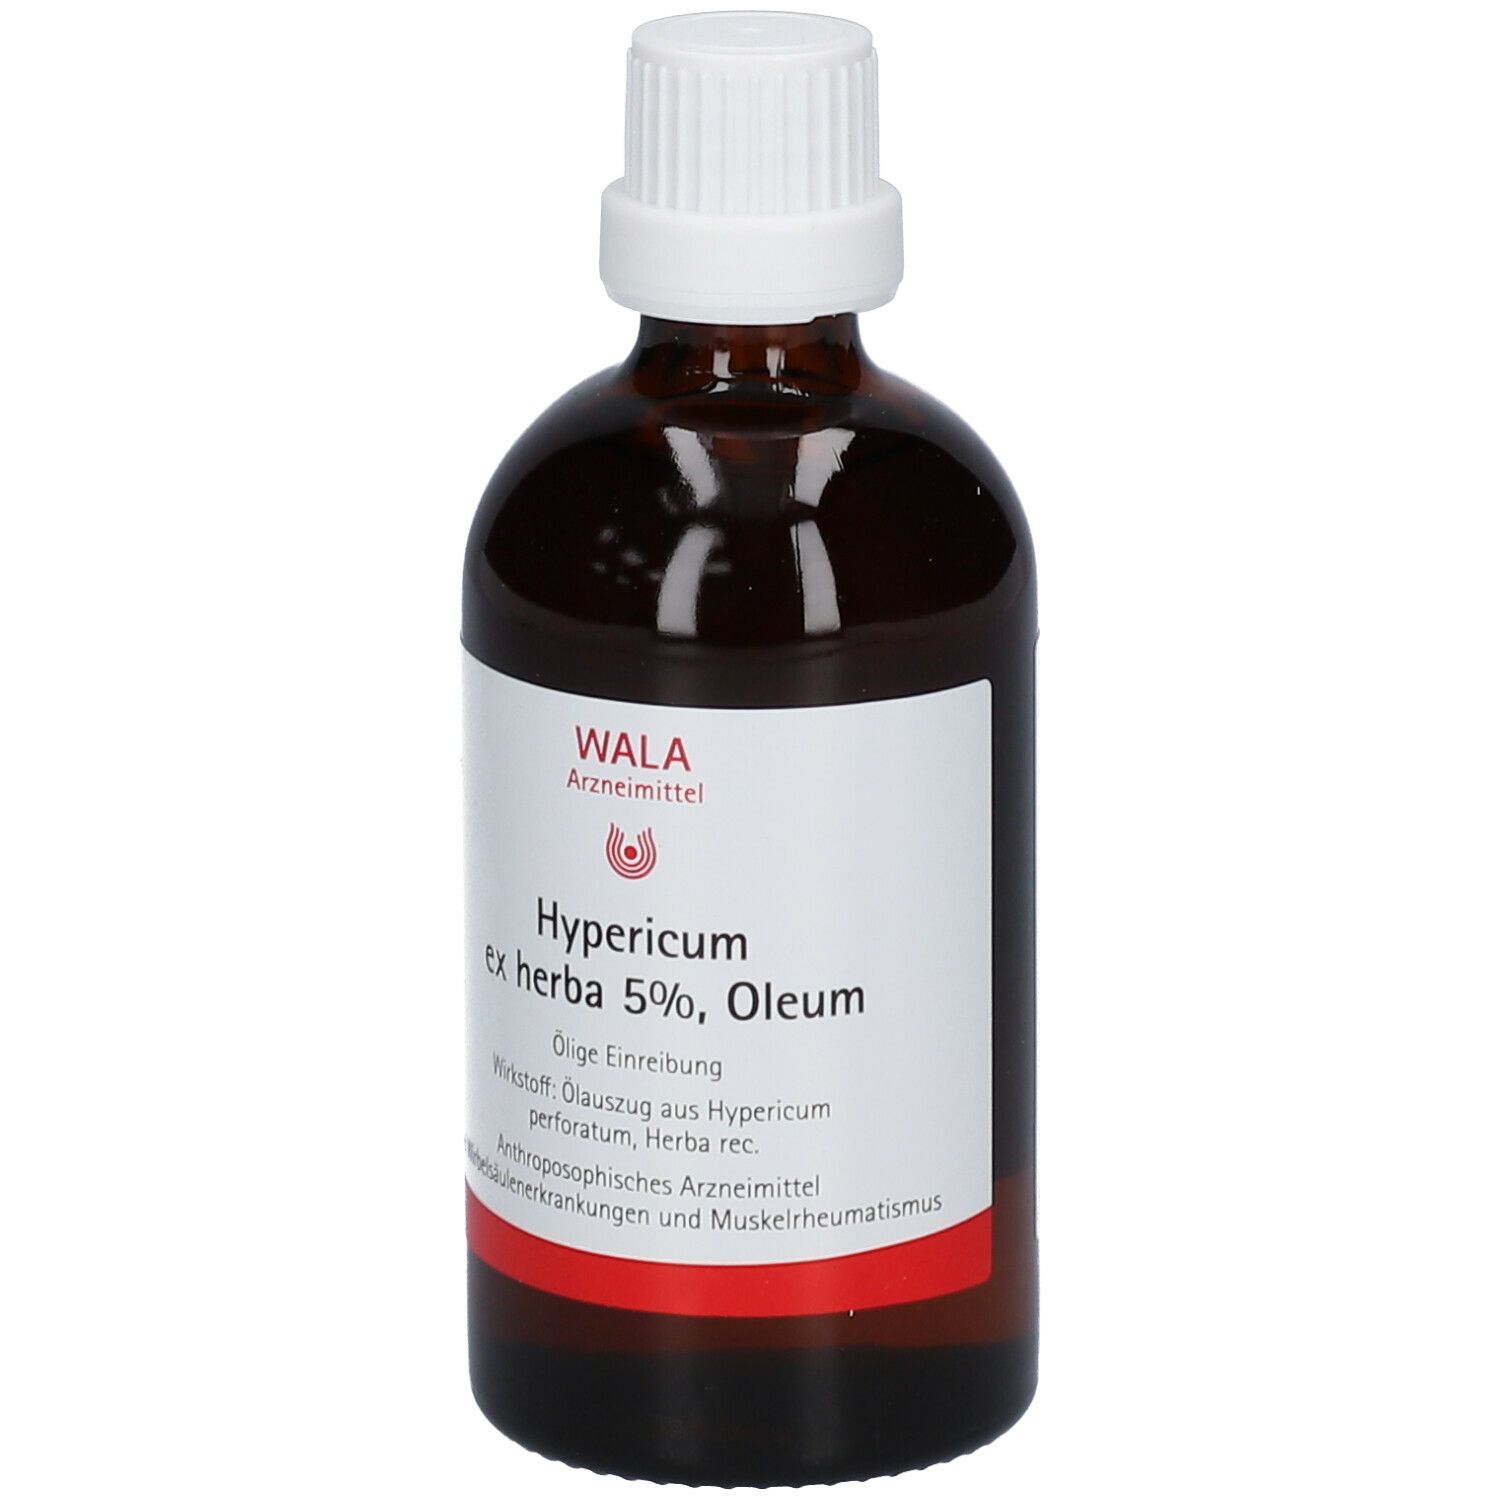 WALA® Hypericum Ex Herba 5% Oleum